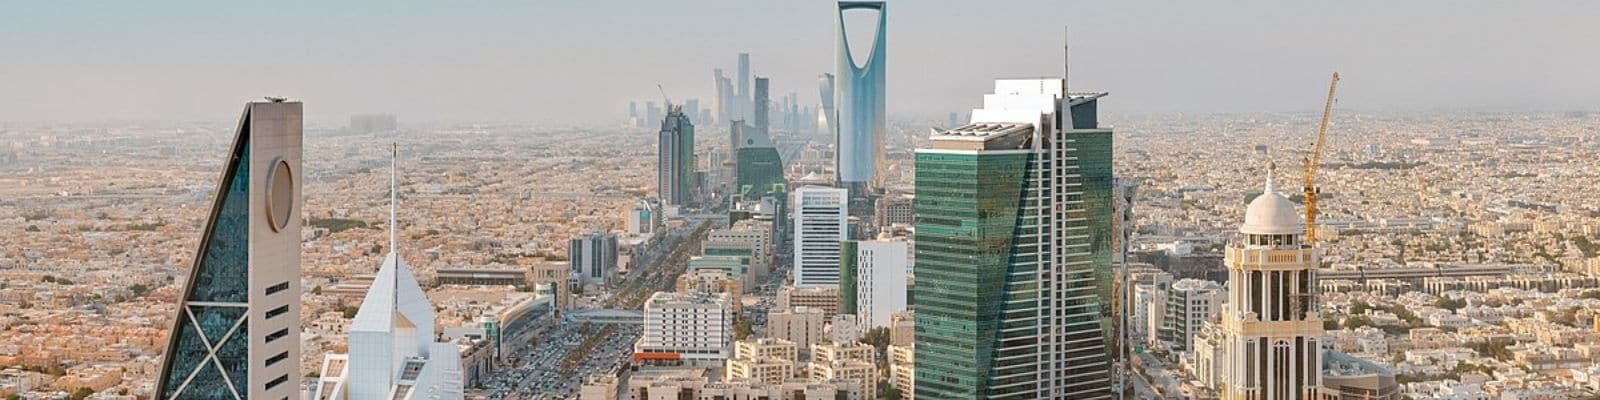 Top 4 Digital Marketing Courses in Riyadh for Upskilling Yourself